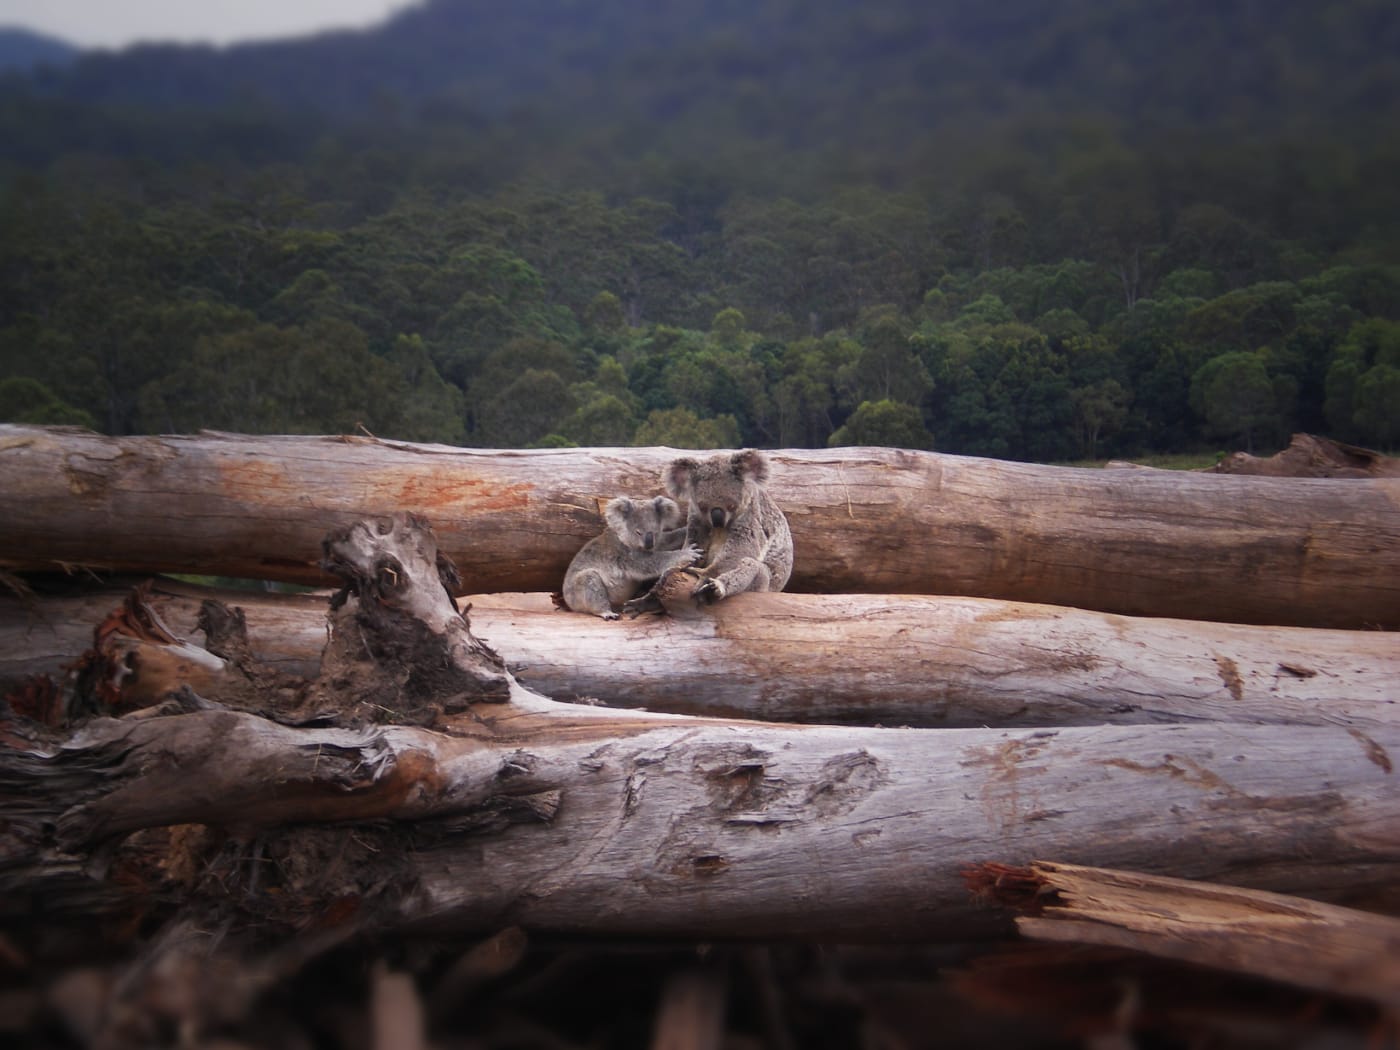 Koala mother and joey seek refuge on bulldozed logs in Queensland, Australia.